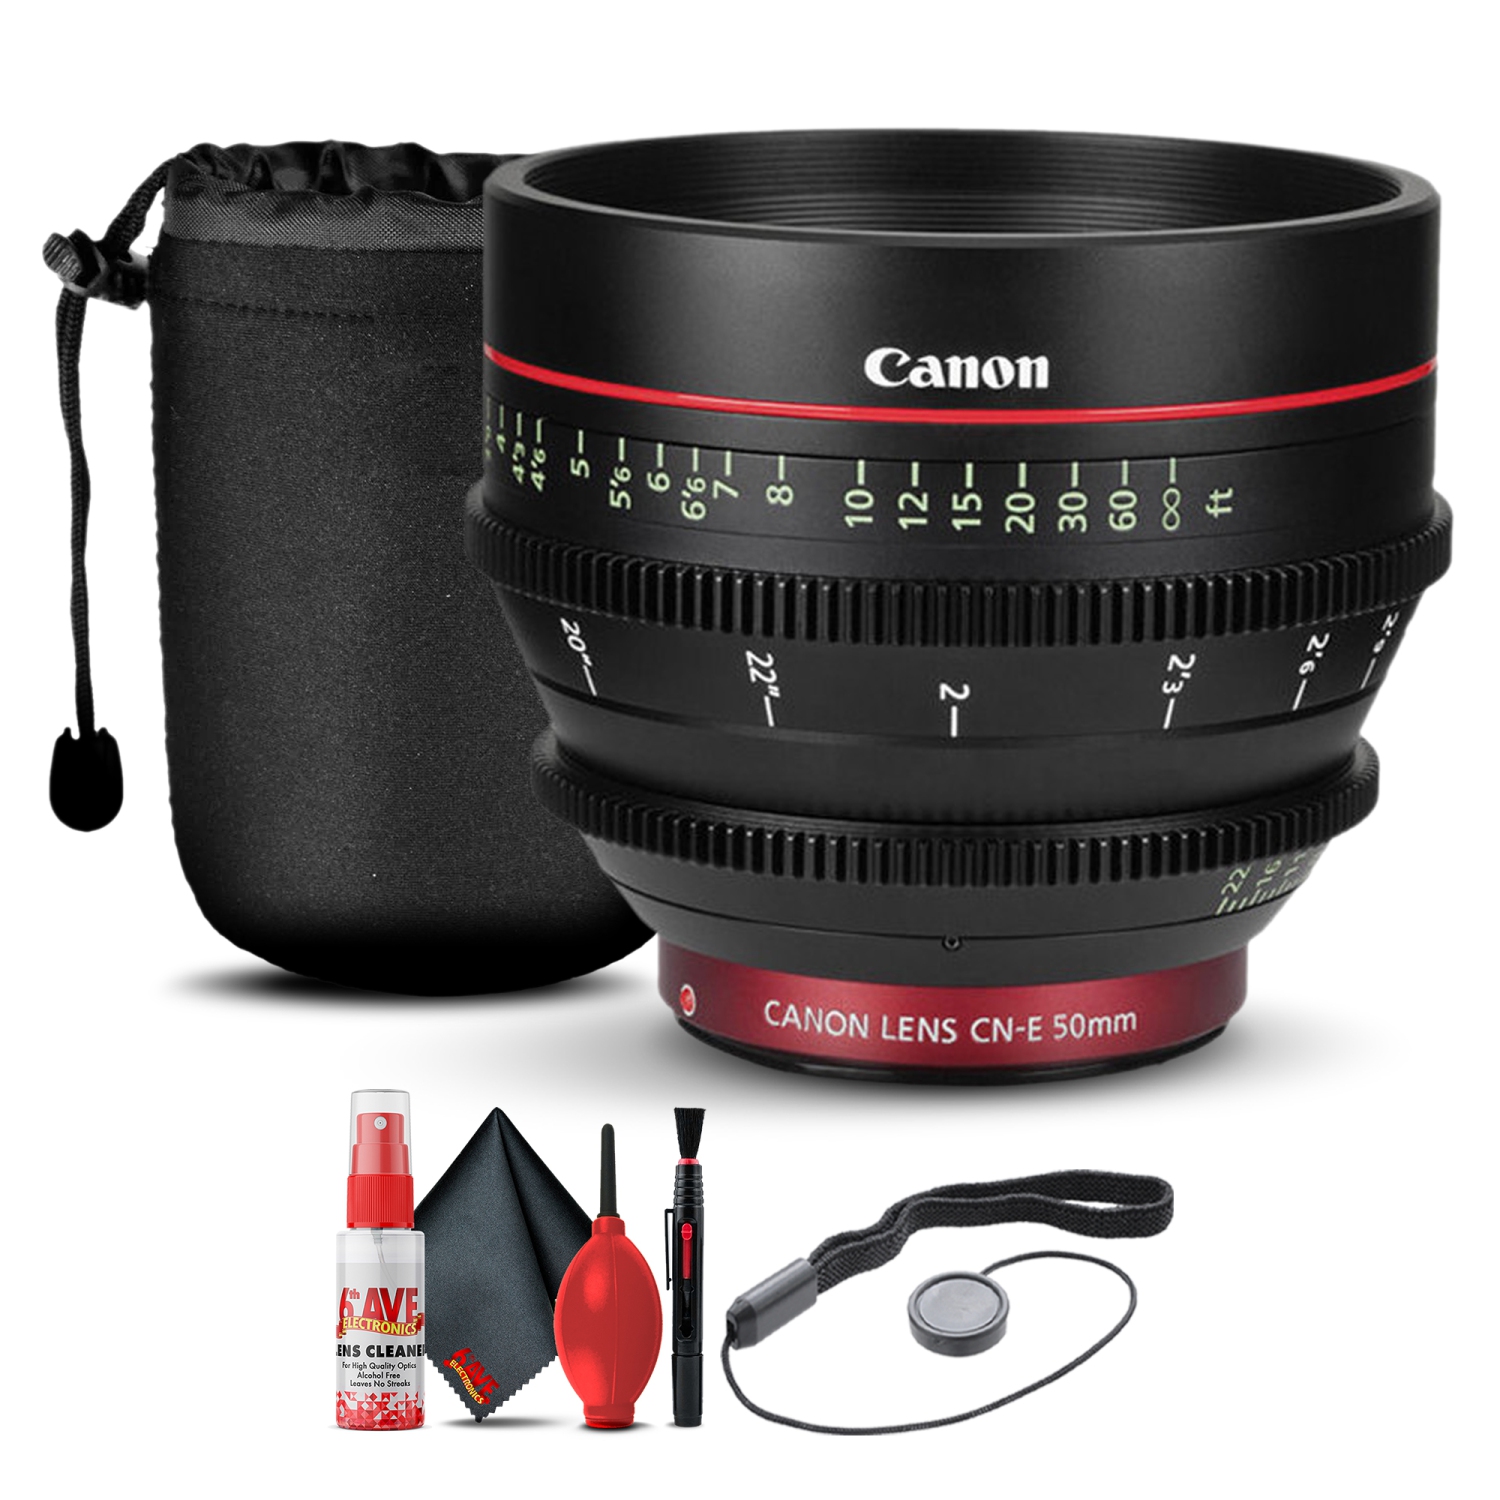 Canon CN-E 50mm T1.3 L F Cine Lens (6570B001) + Lens Pouch + Cap Keeper + More